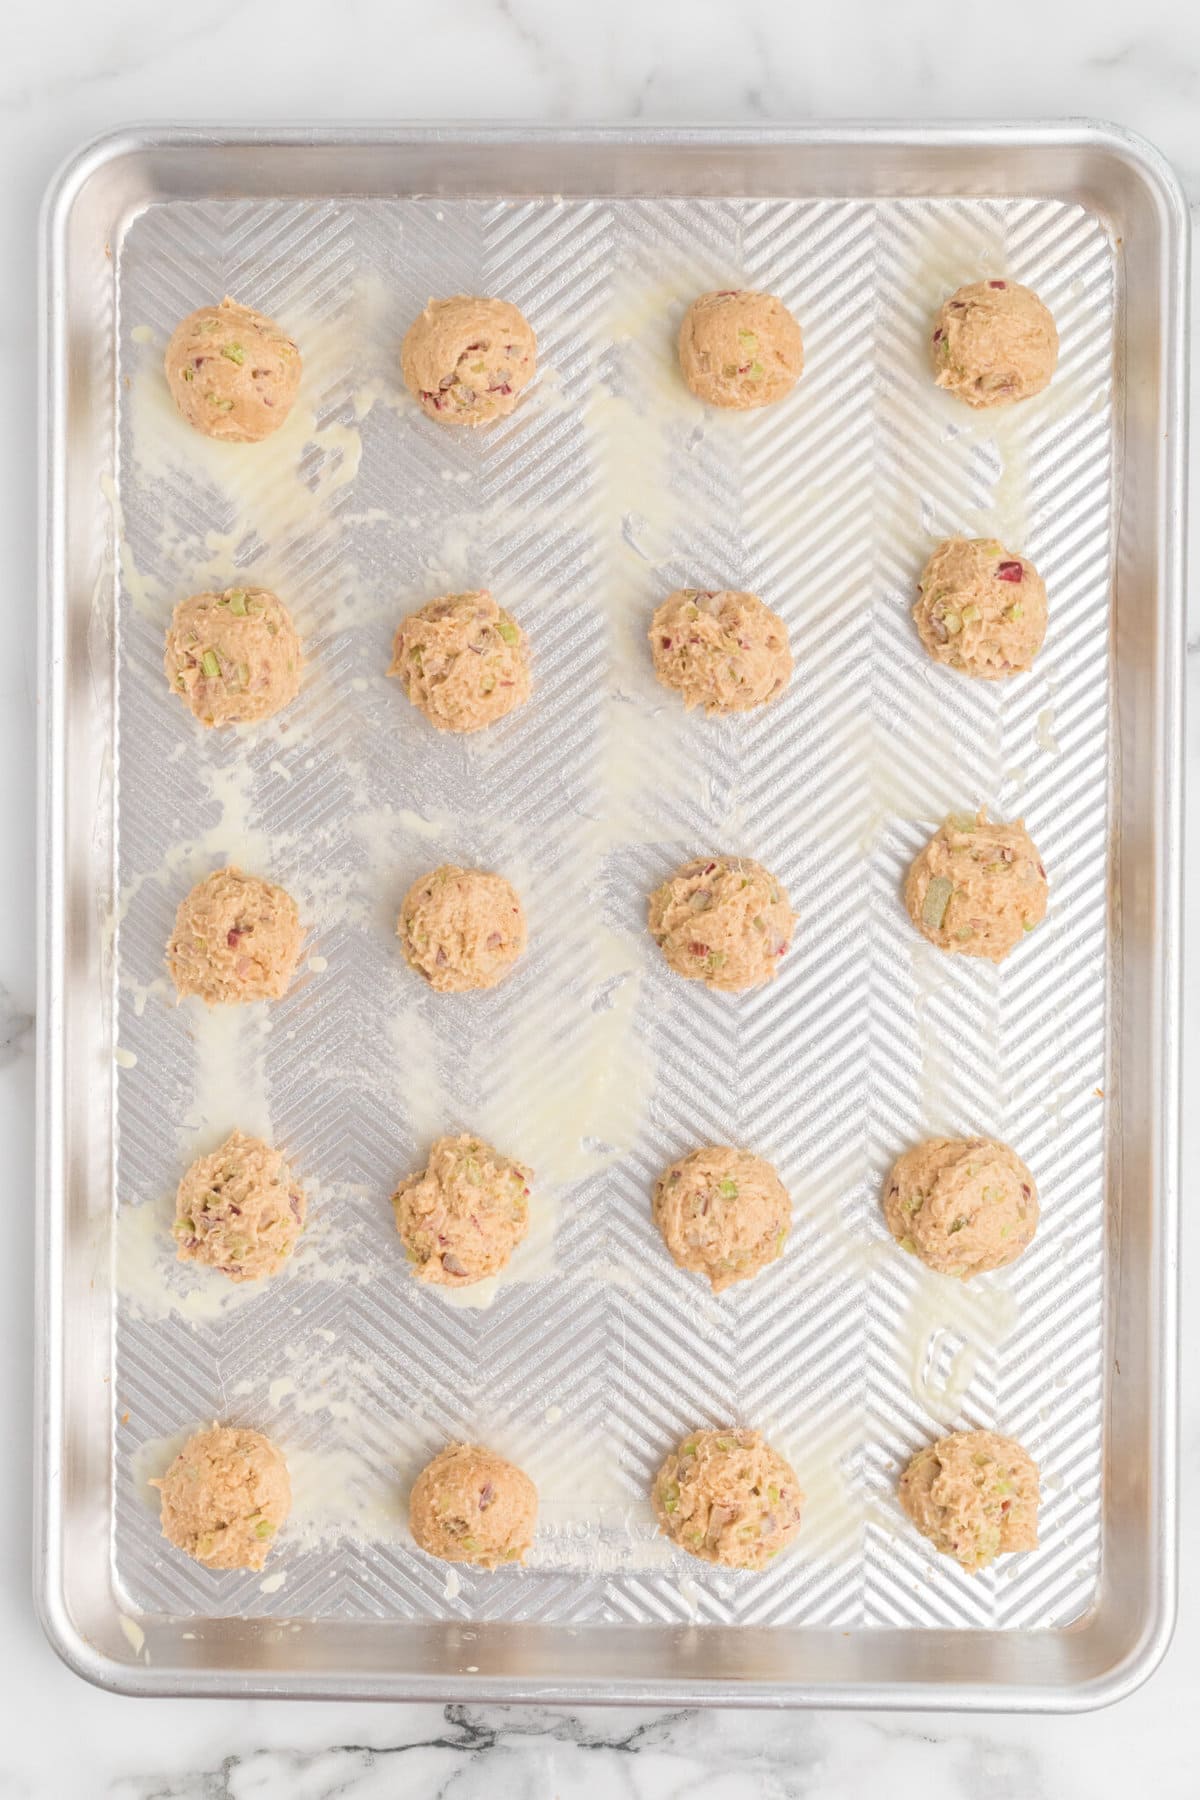 The dough balls on a tray.